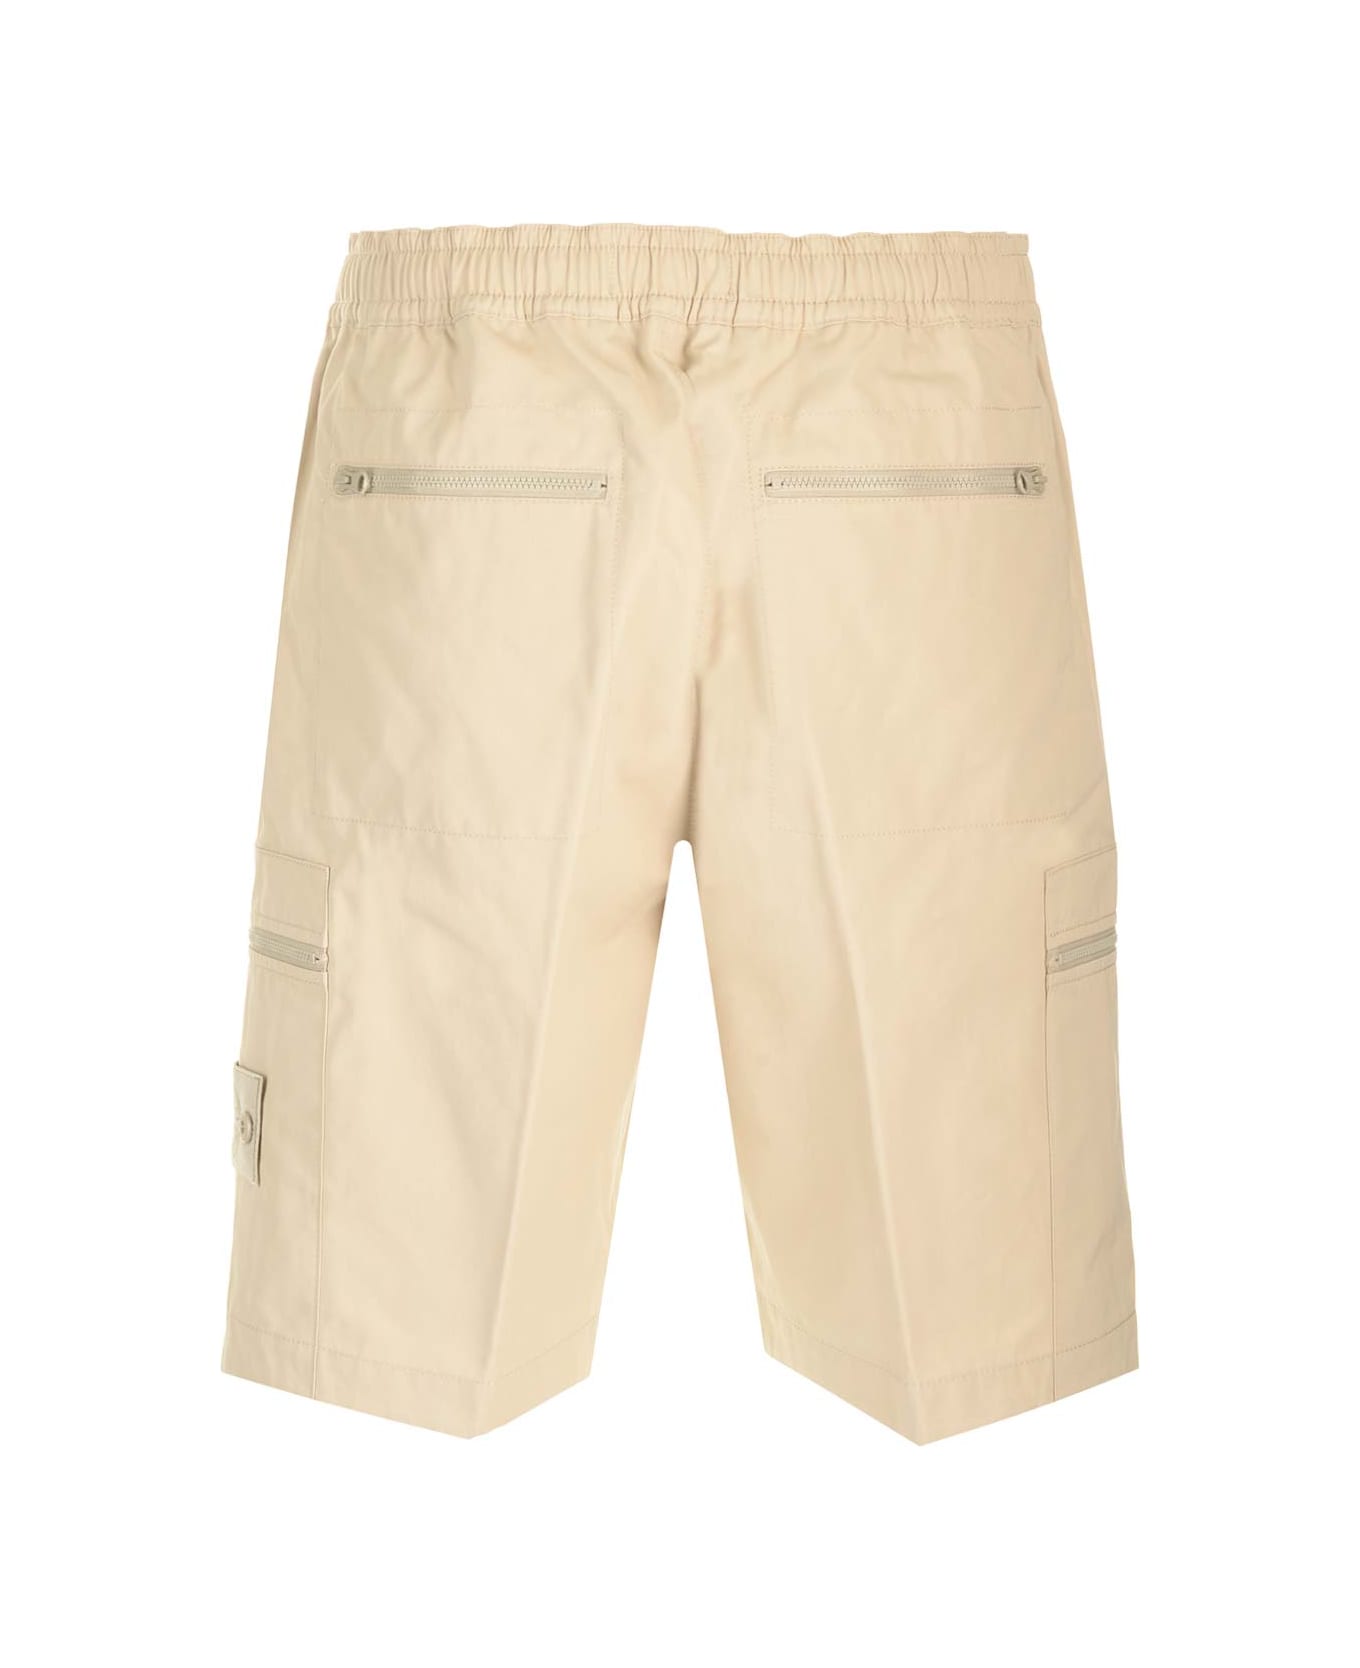 Stone Island Bermuda Cargo Shorts - Nude & Neutrals